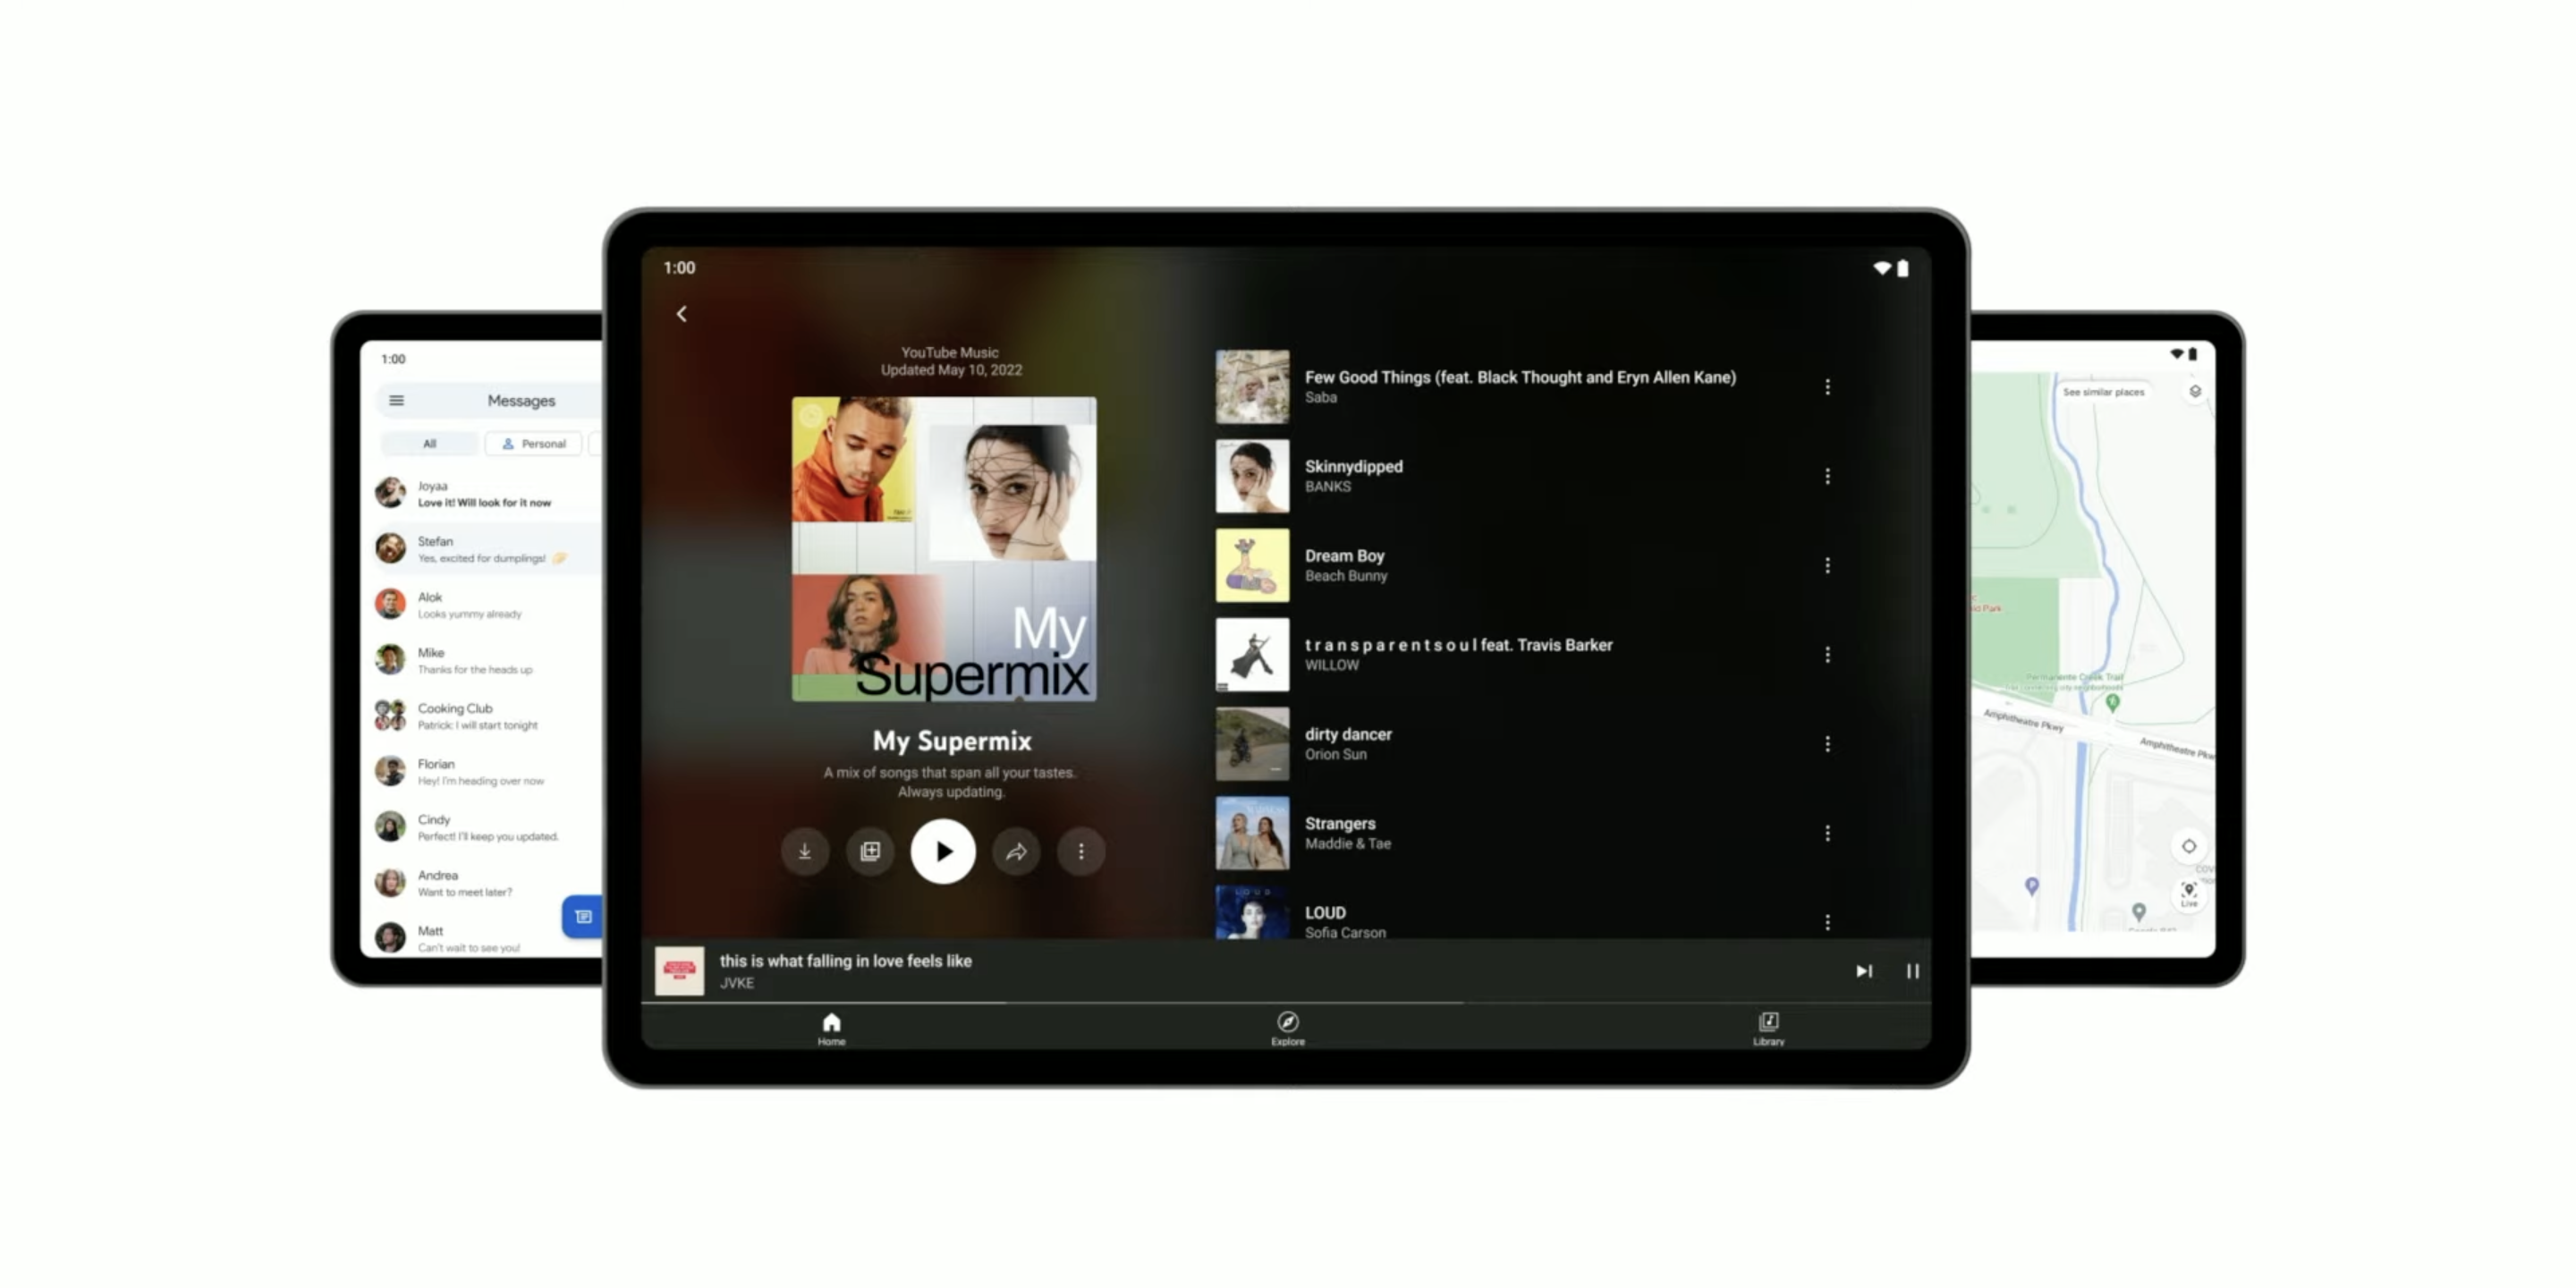 YouTube tablet music